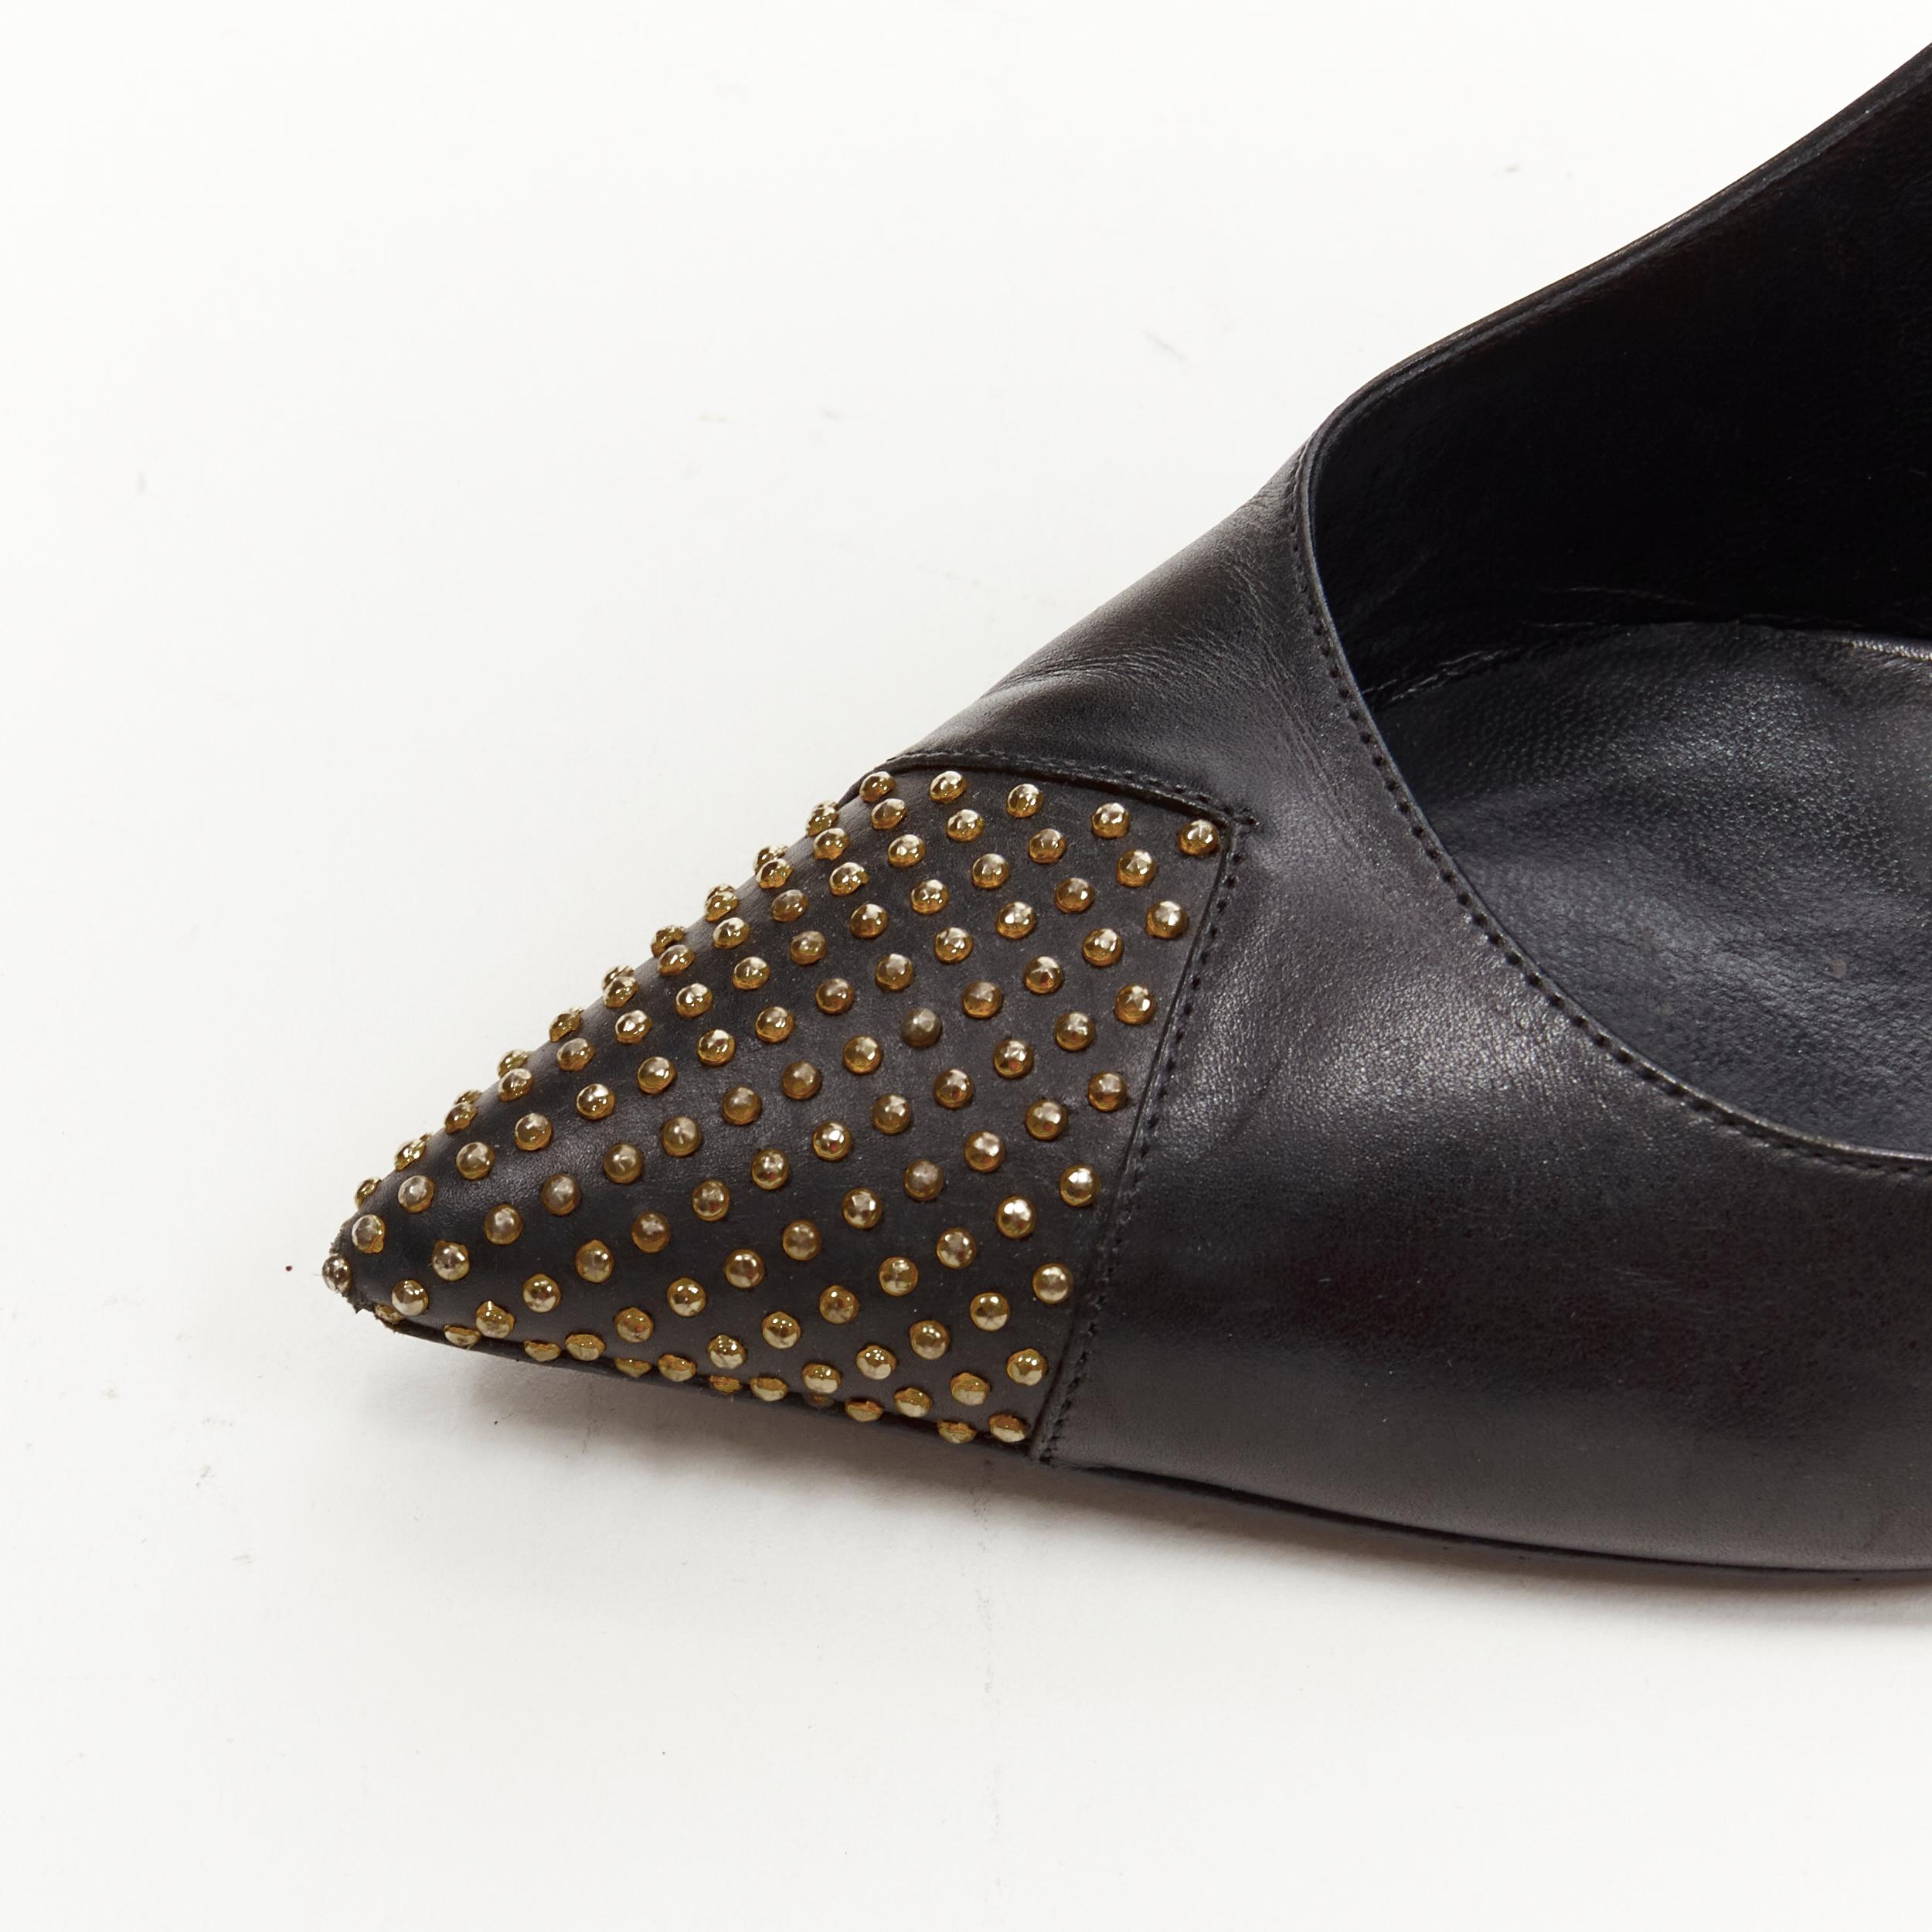 SAINT LAURENT Janis black leather gold icro stud toe cap high heel pump EU38 3